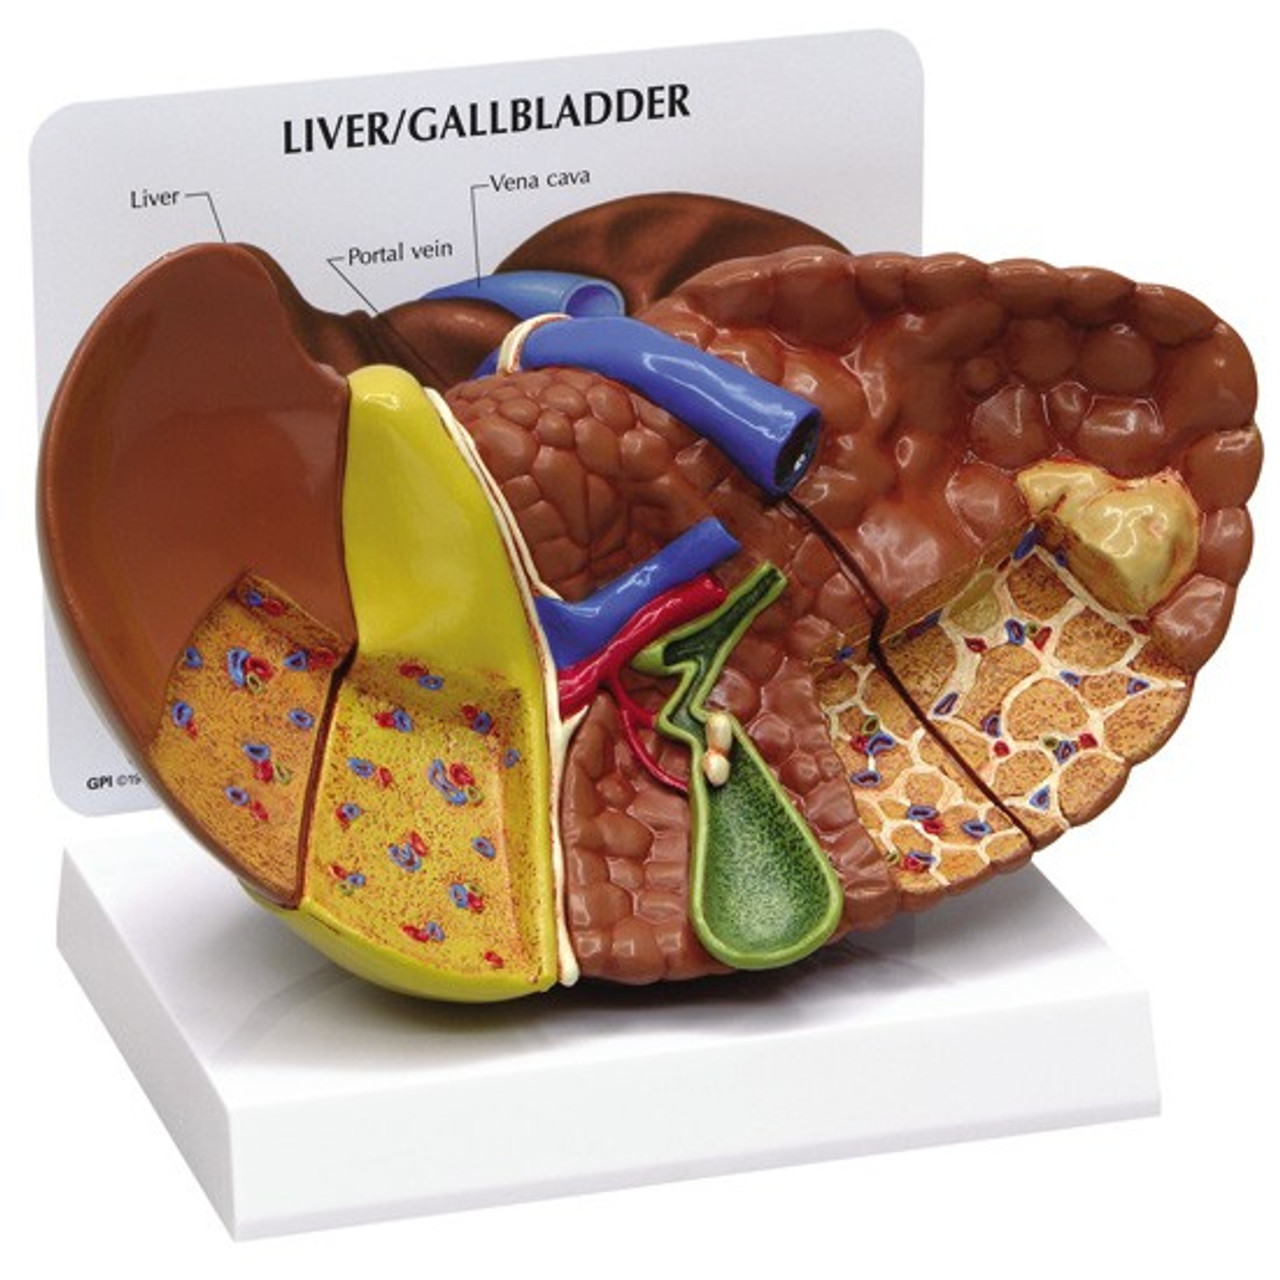 pancreas model anatomy